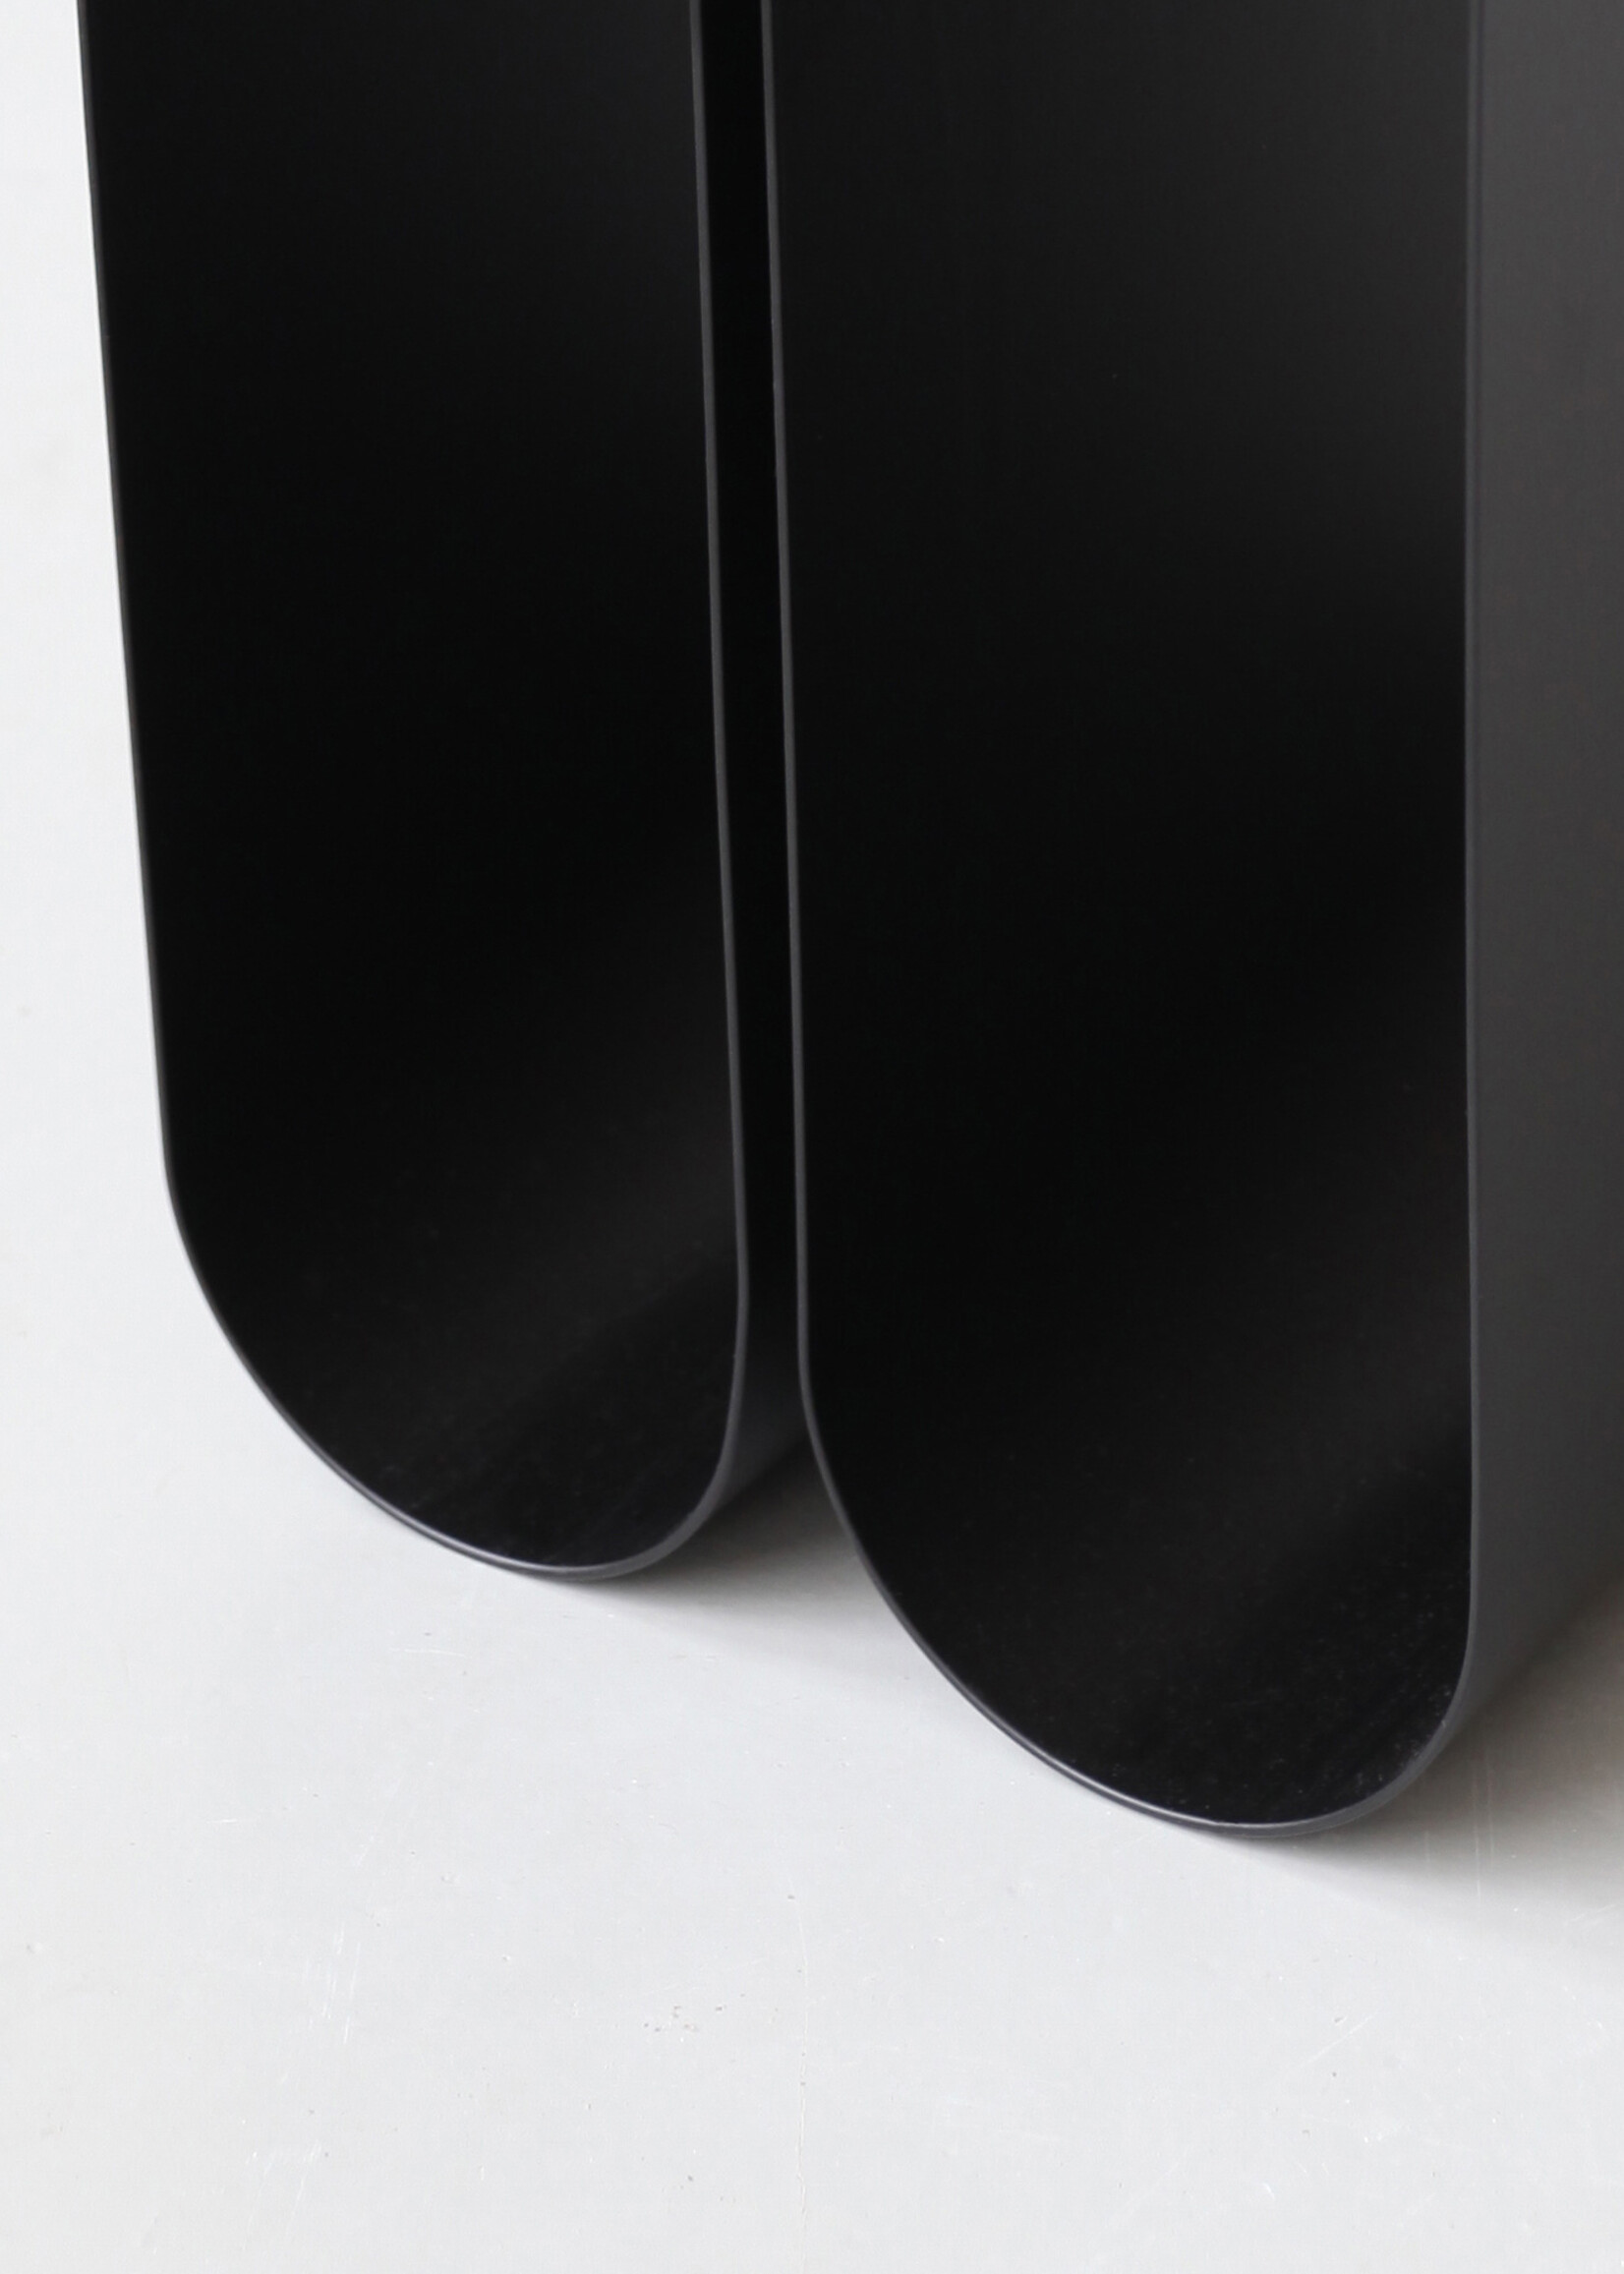 Kristina Dam Curved side table - black steel